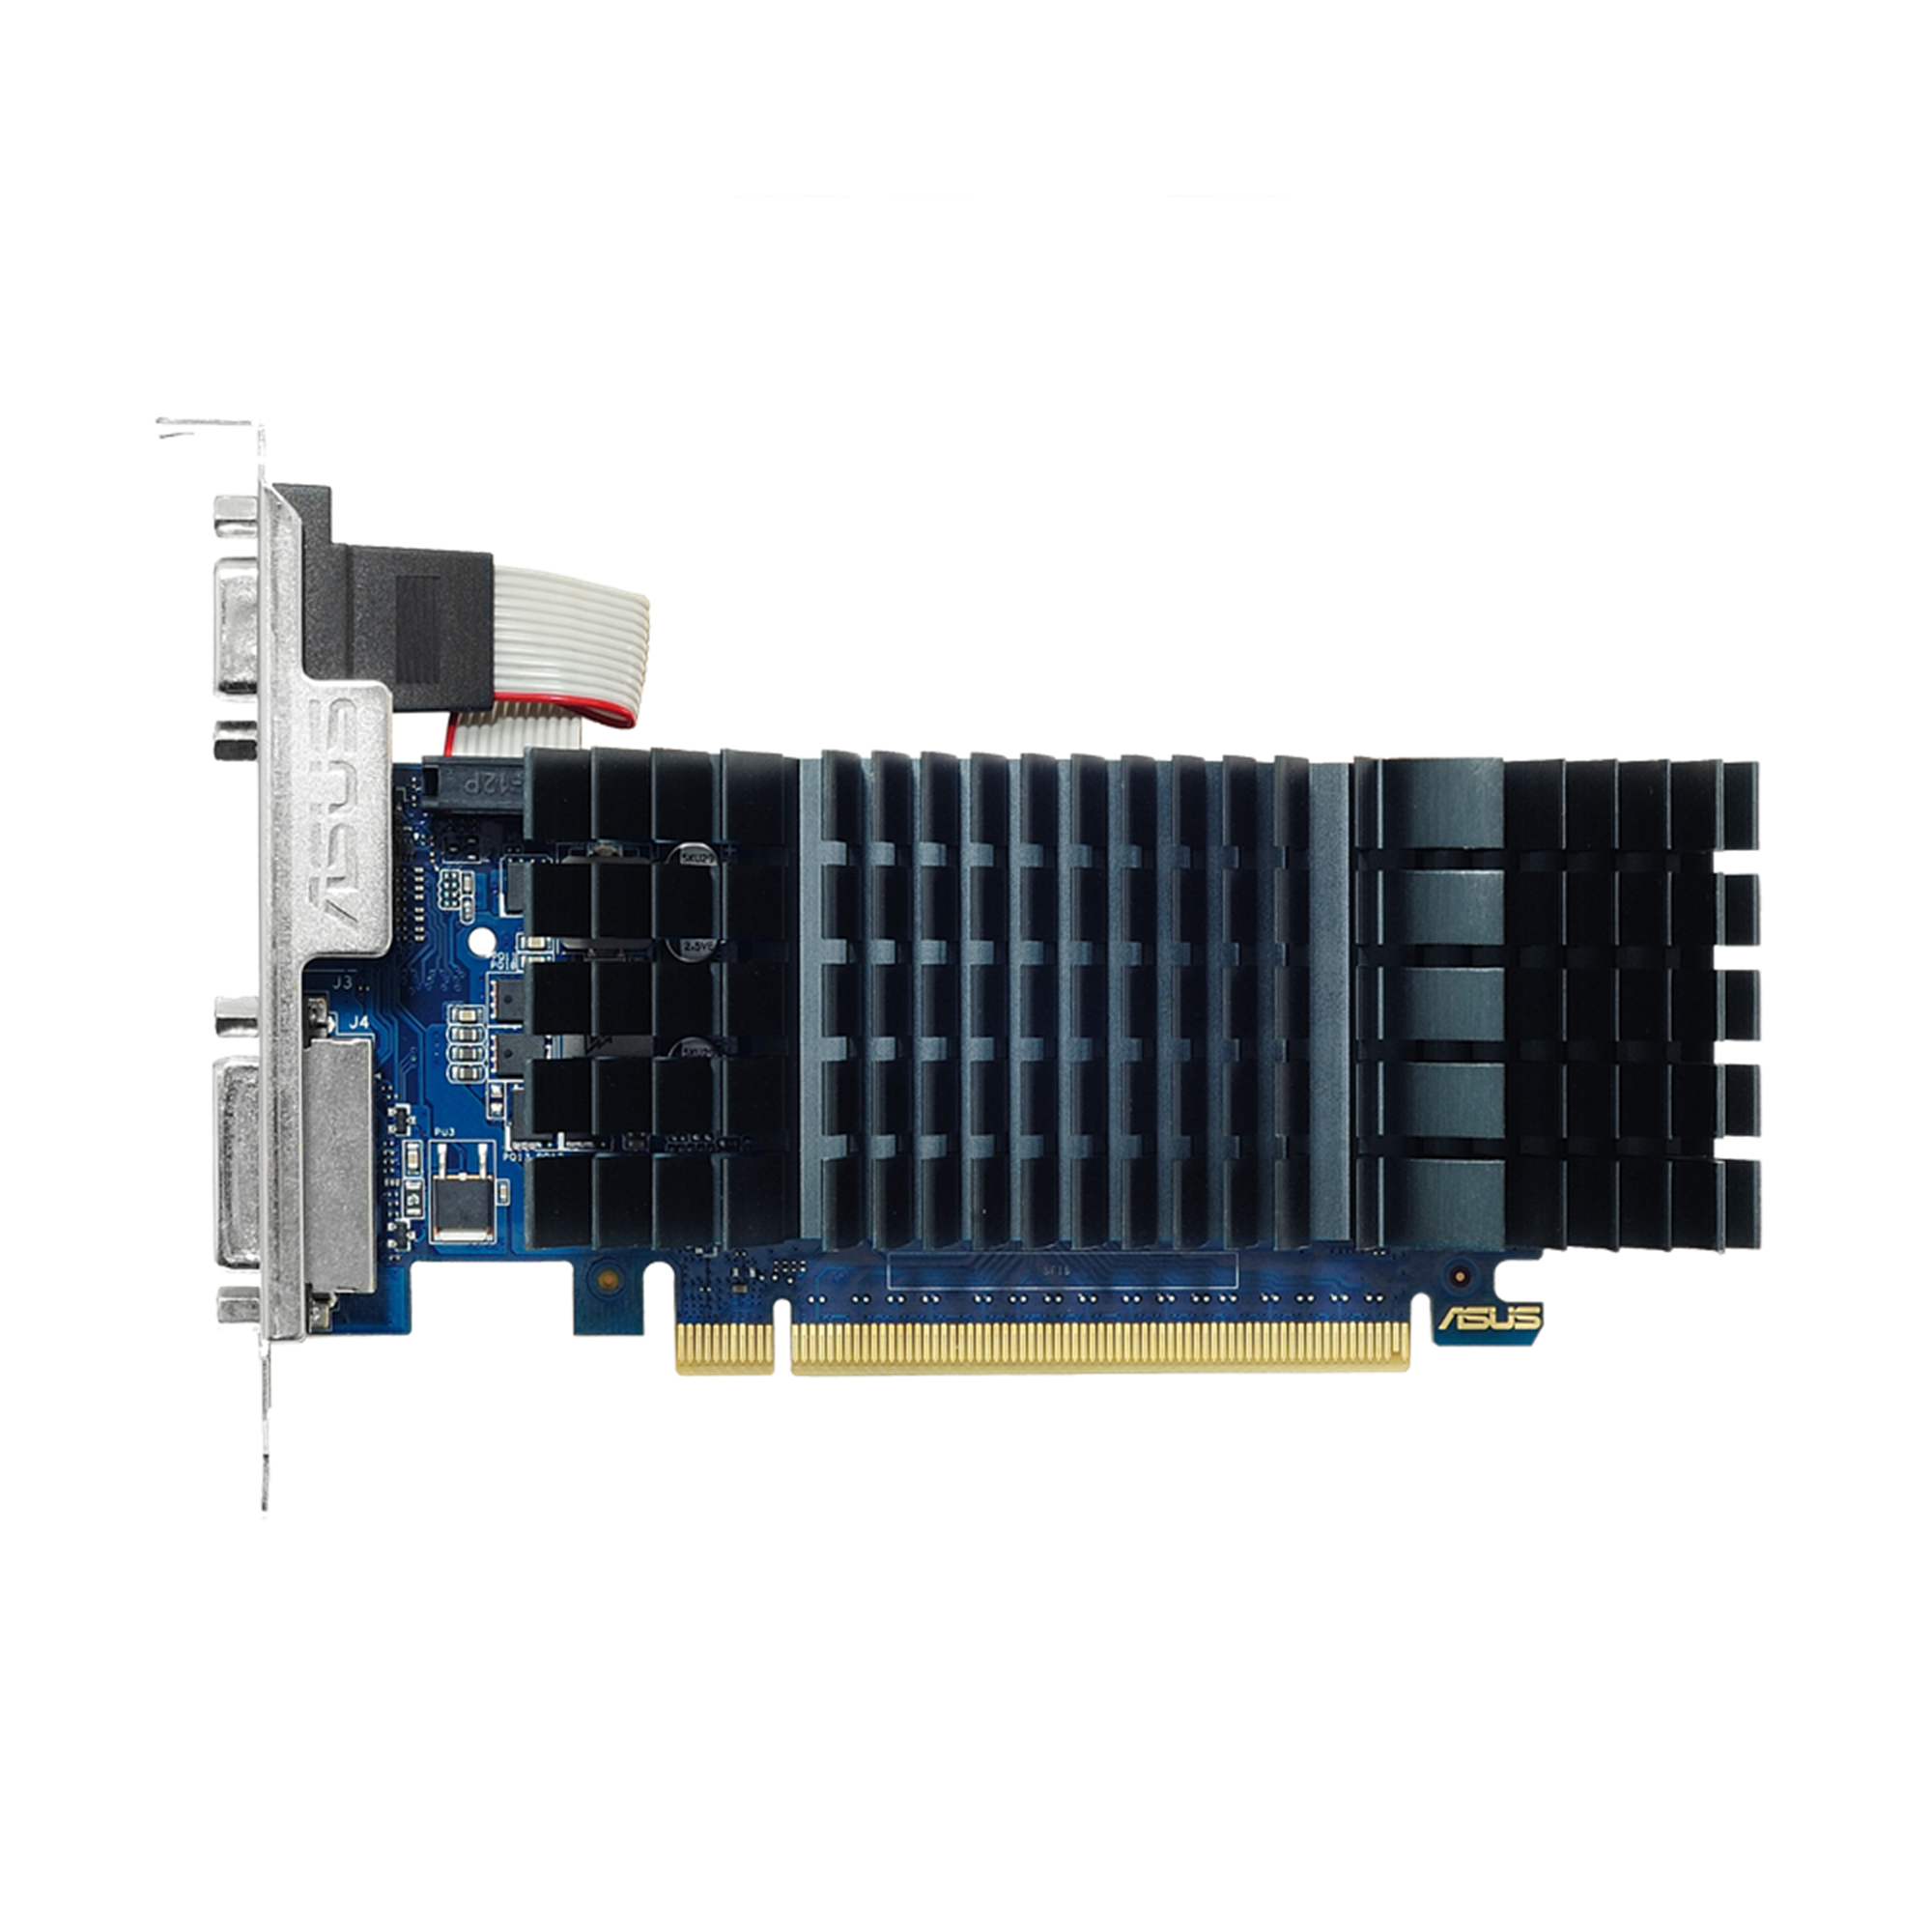 ASUS NVIDIA GeForce GT 730 Graphics Card GT730-SL-2GD3-BRK-EVO (PCIe 2.0,  2GB DDR3 Memory, Low-Profile, Auto-Extreme Technology, GPU Tweak II)